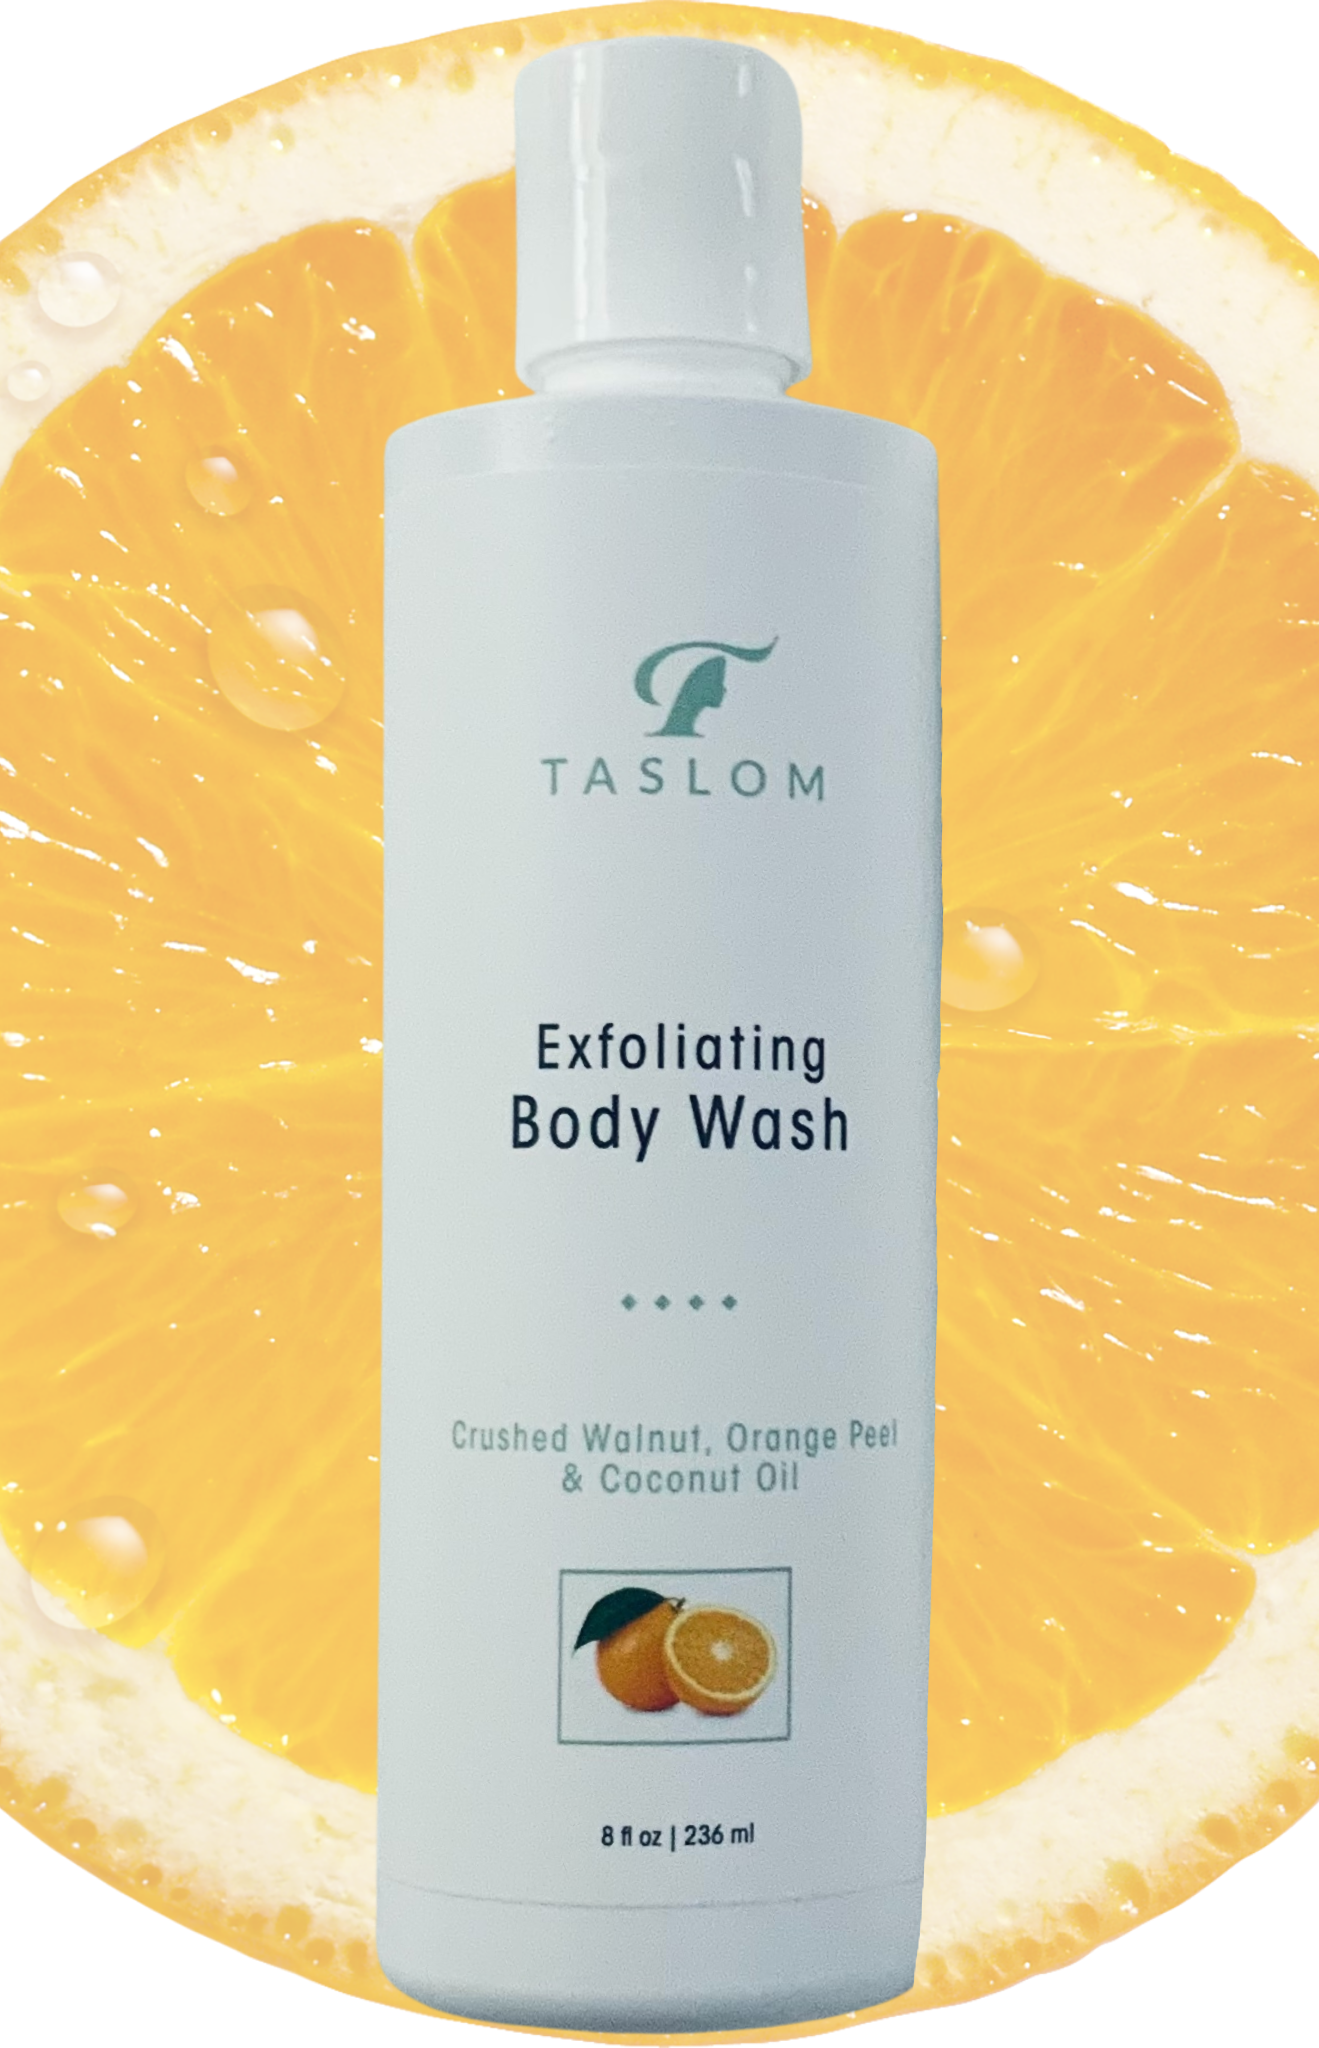 TASLOM'S Natural Exfoliating Body Wash